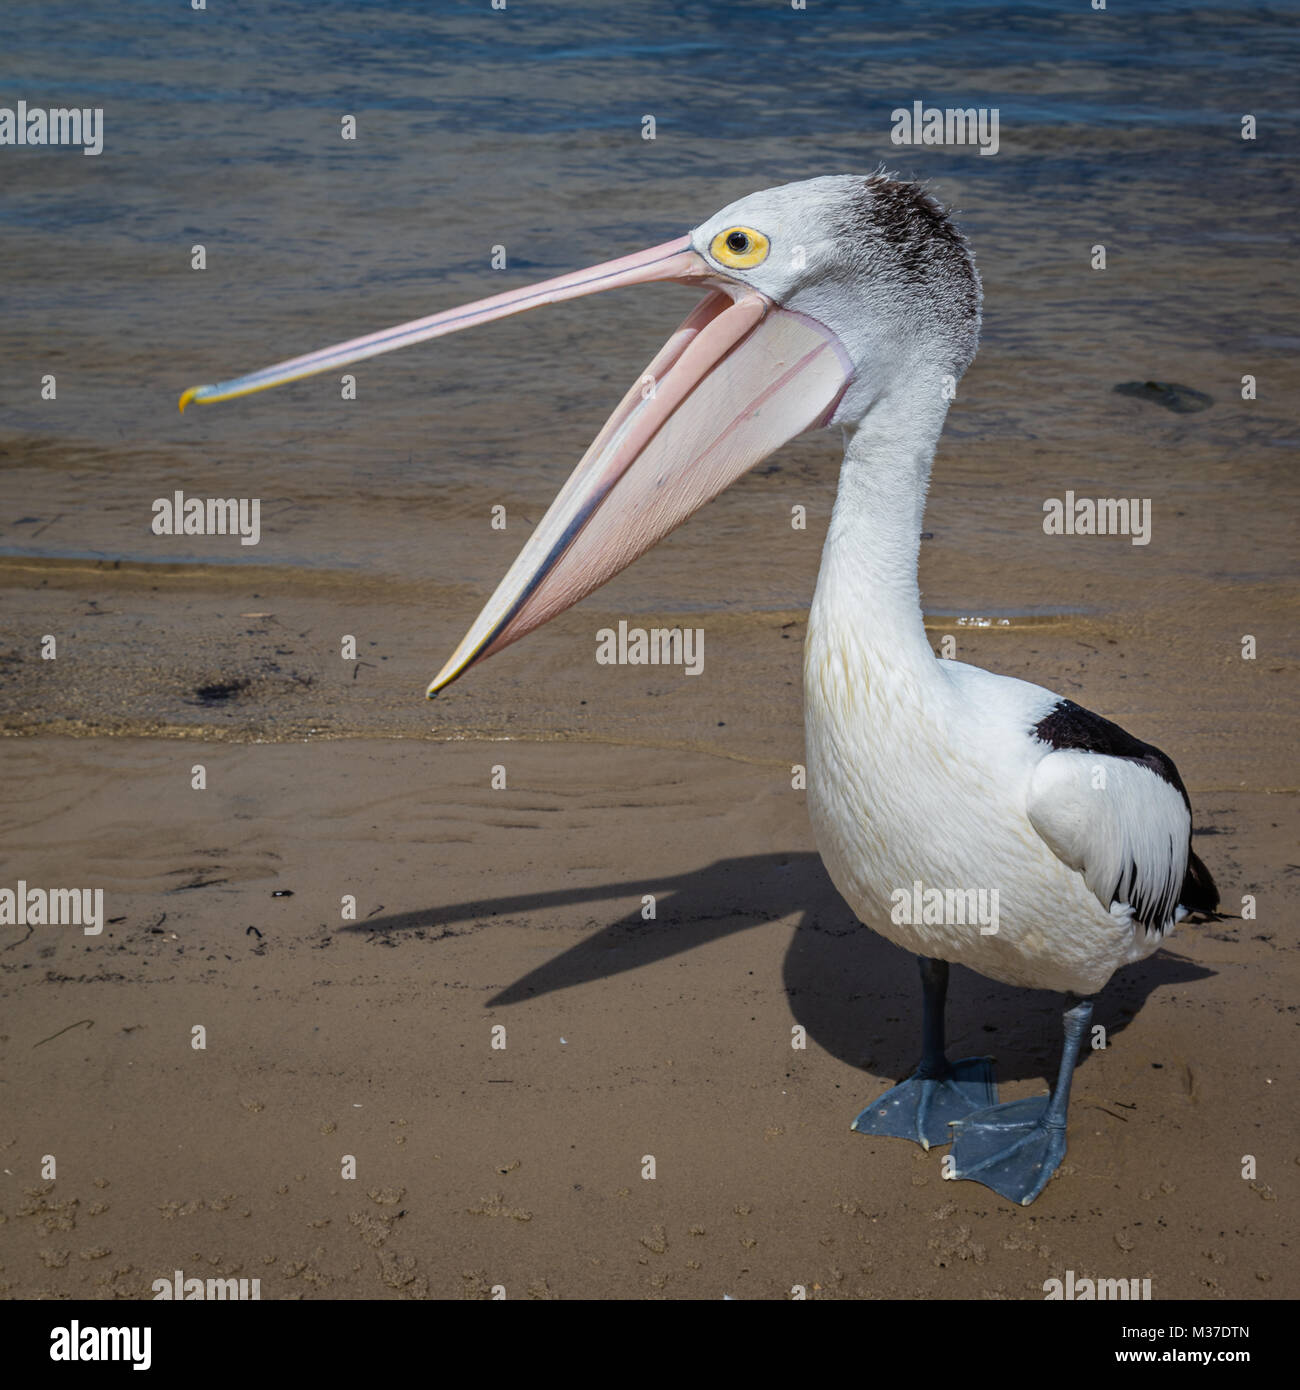 Australian pelican on a beach, Queensland, Australia. Square image. Stock Photo